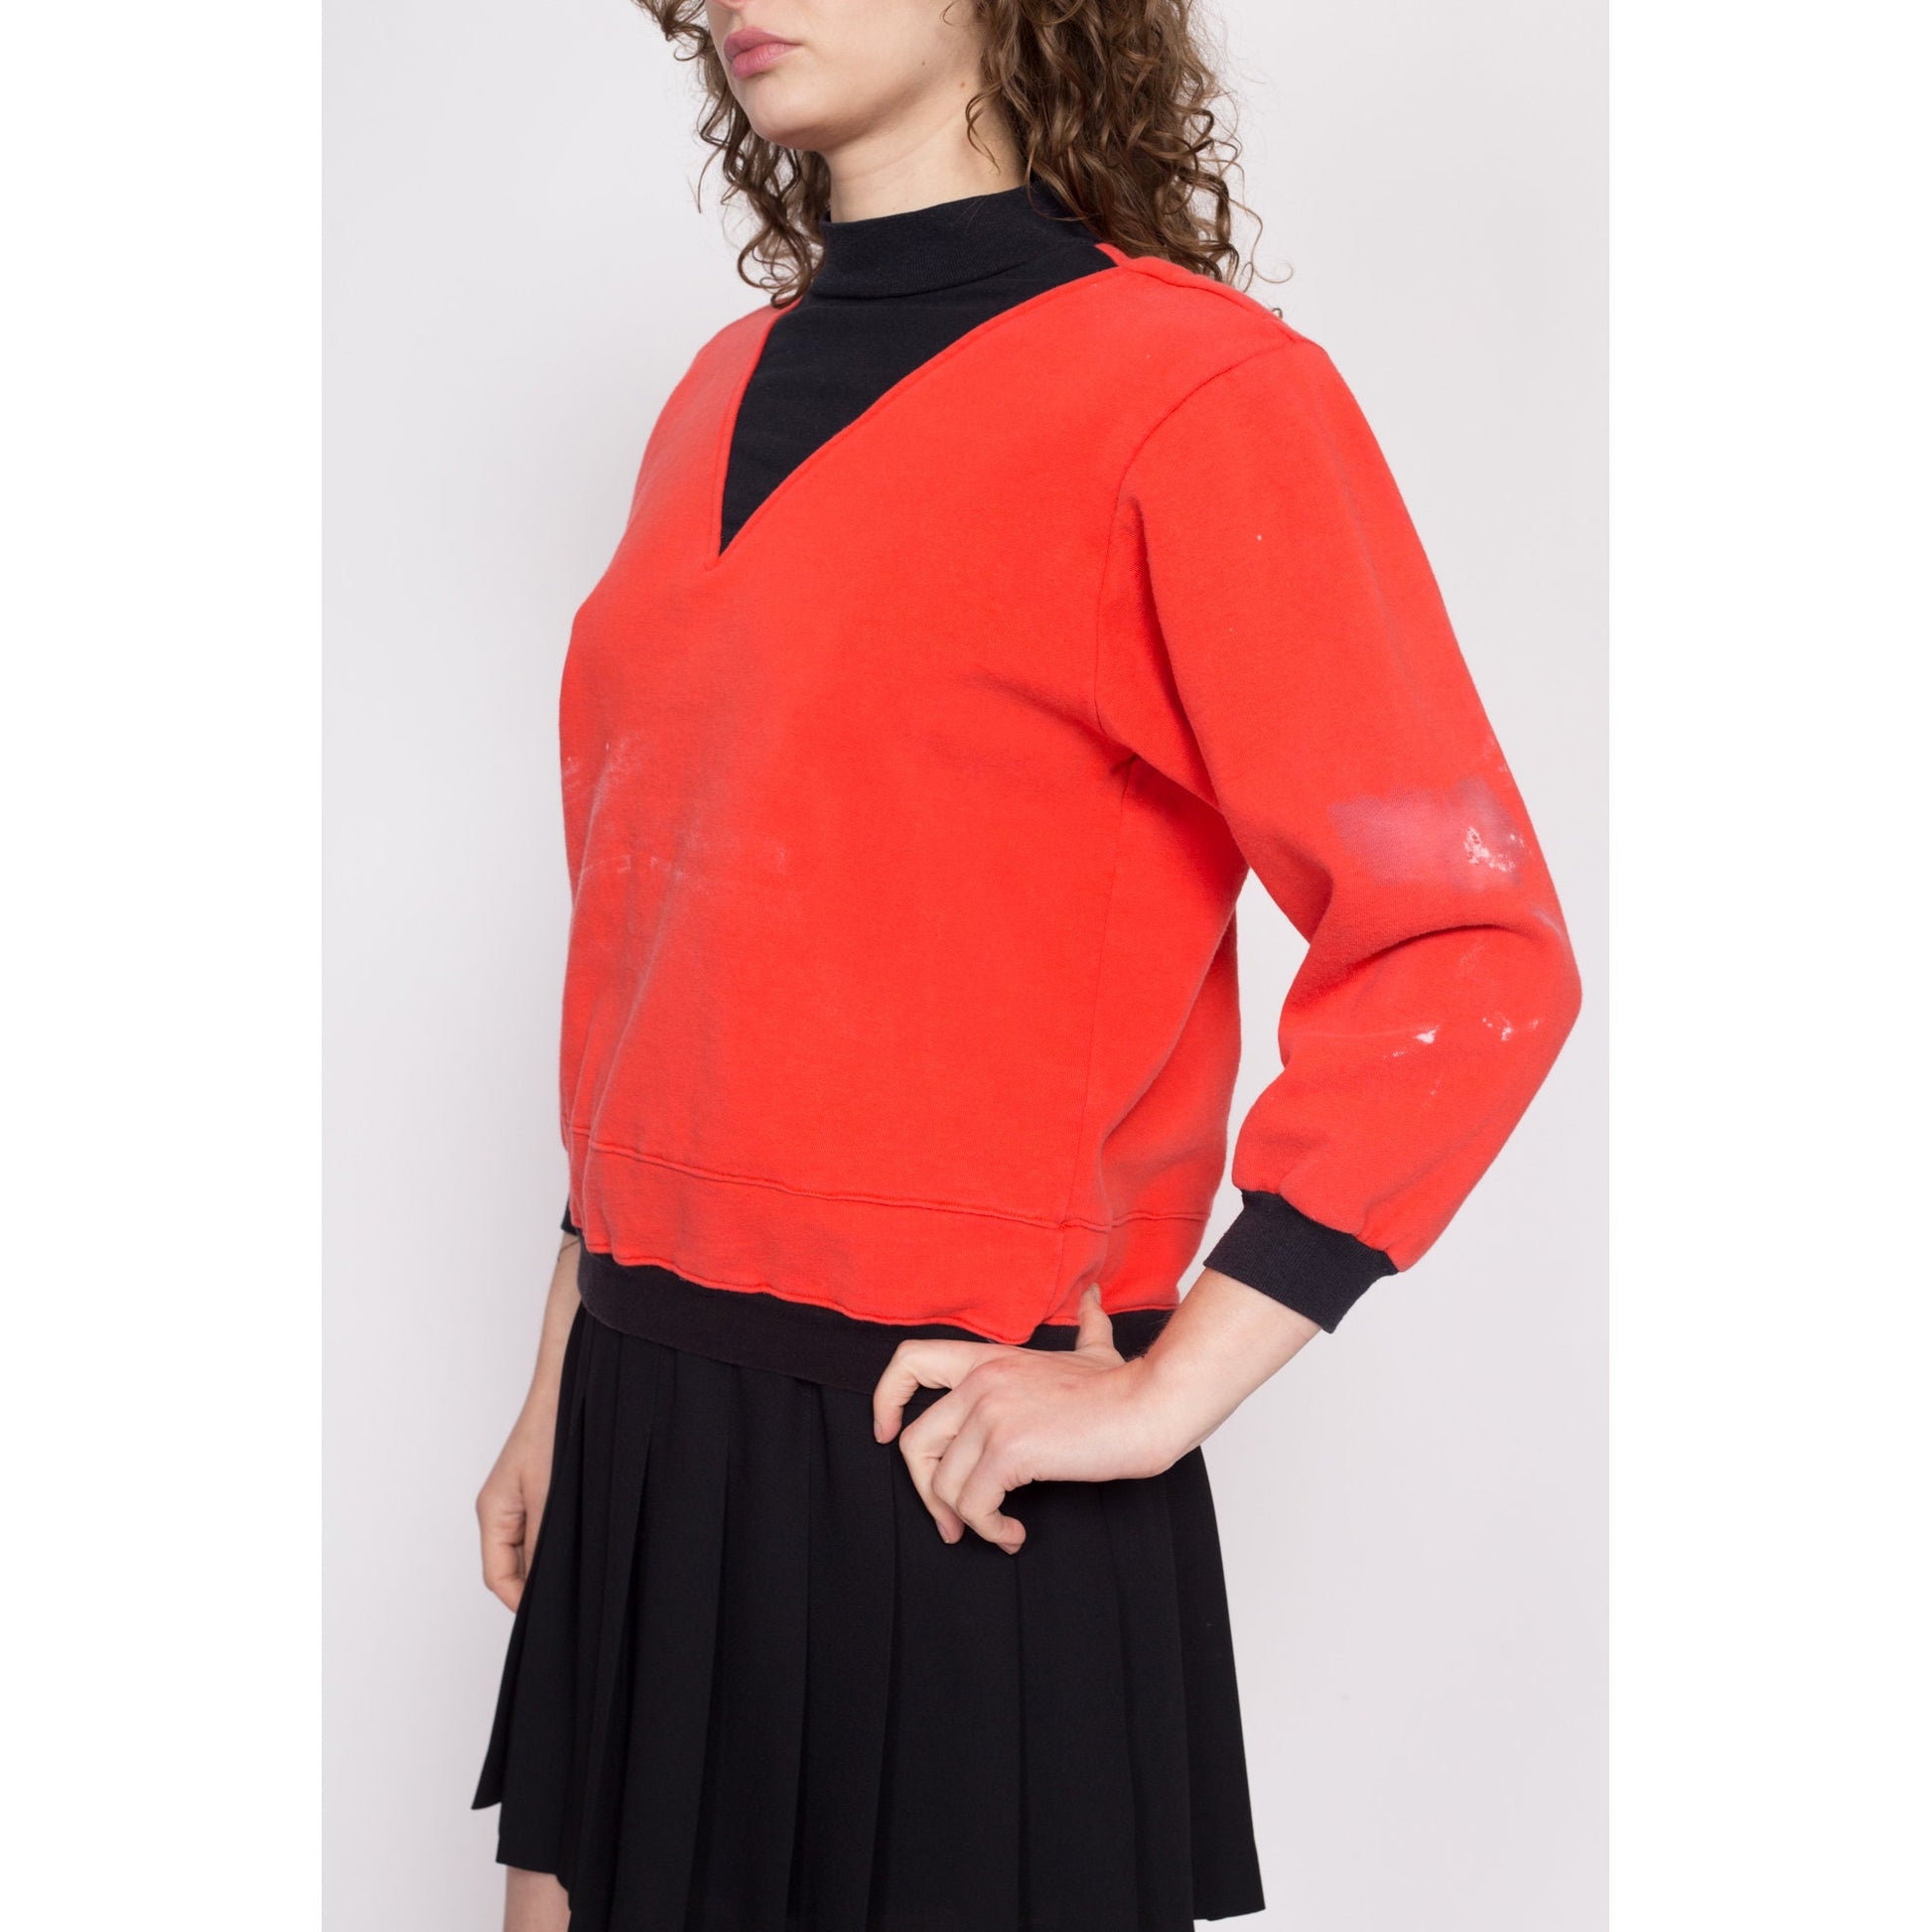 80s Orange Black Color Block Sweatshirt - Petite Small to Medium | Vintage Distressed Colorful Crewneck Pullover